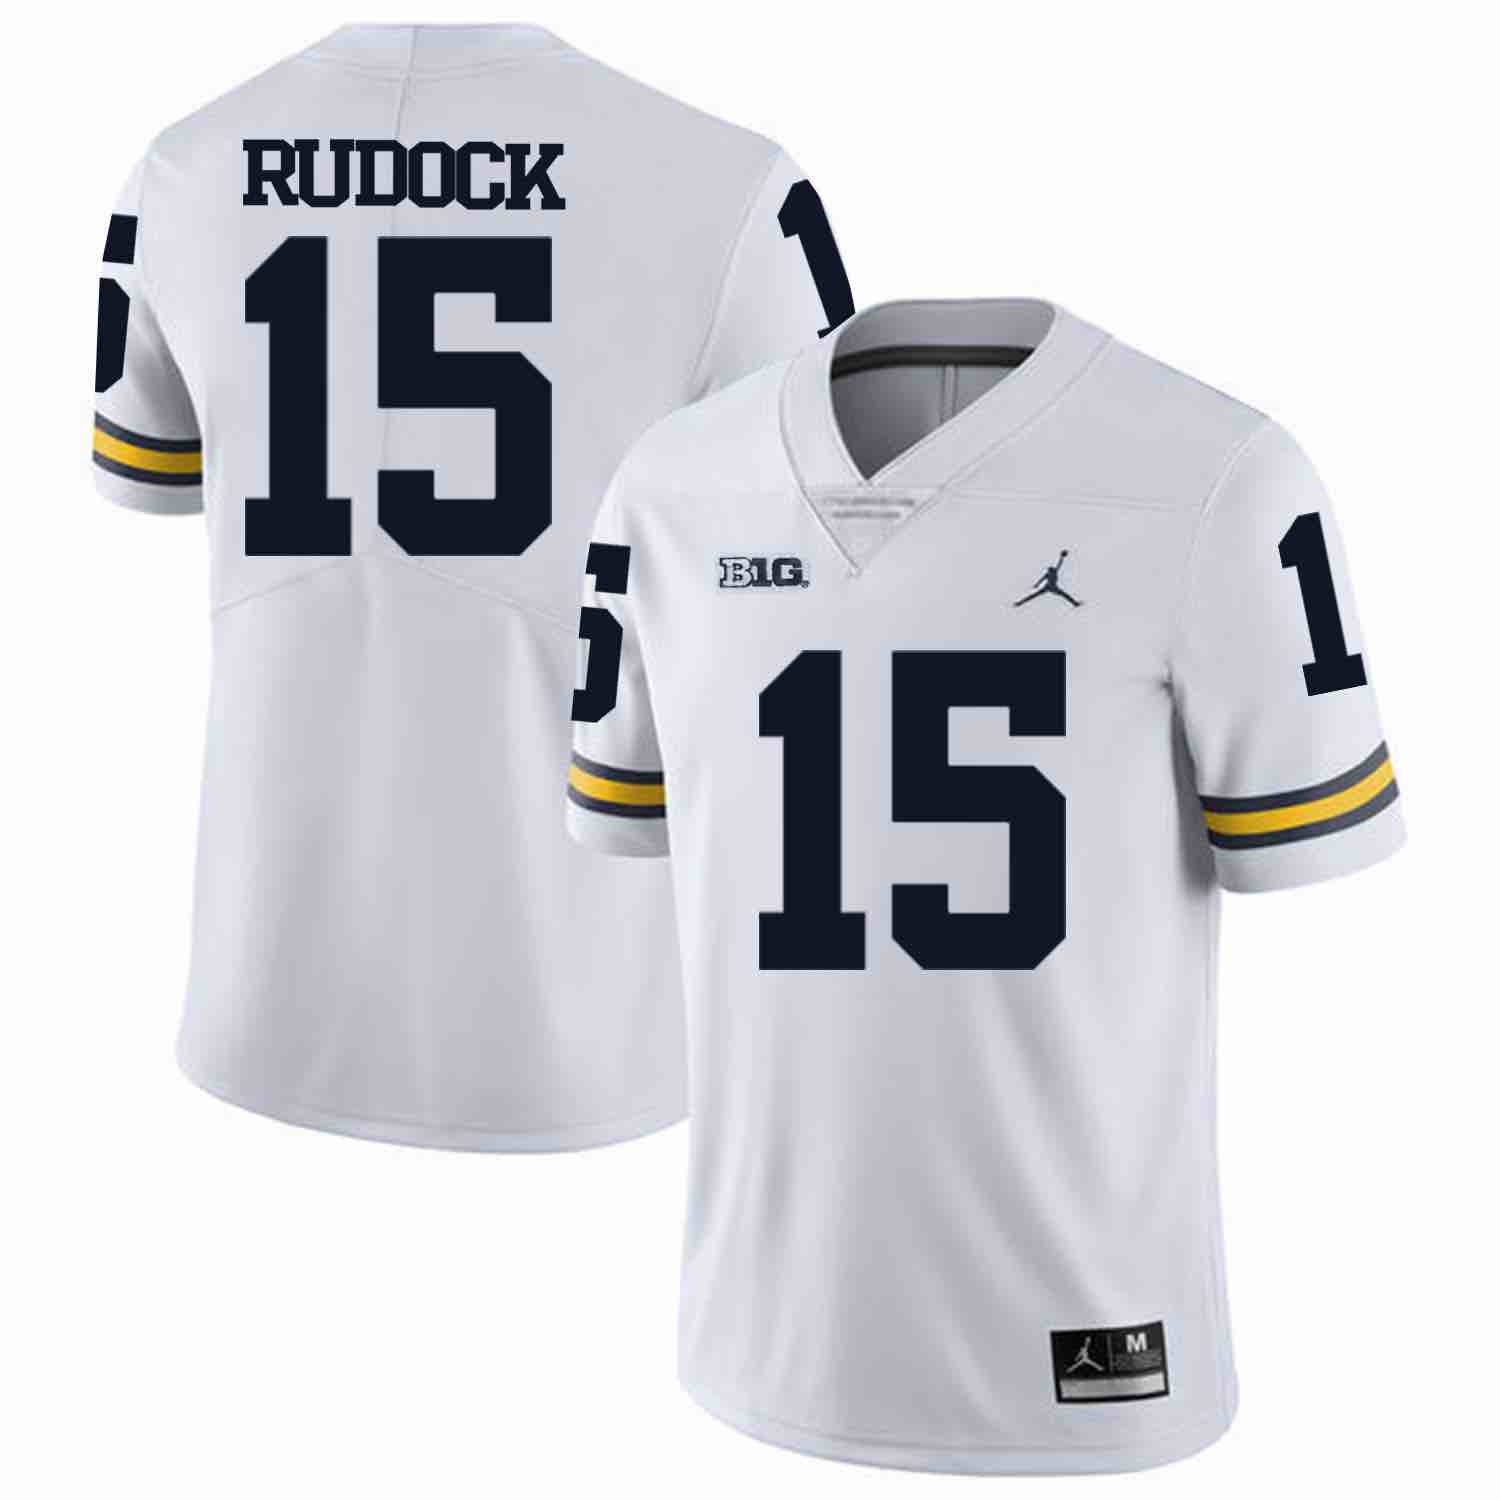 NCAA Michigan Wolverines #15 Rudock White Football Jersey